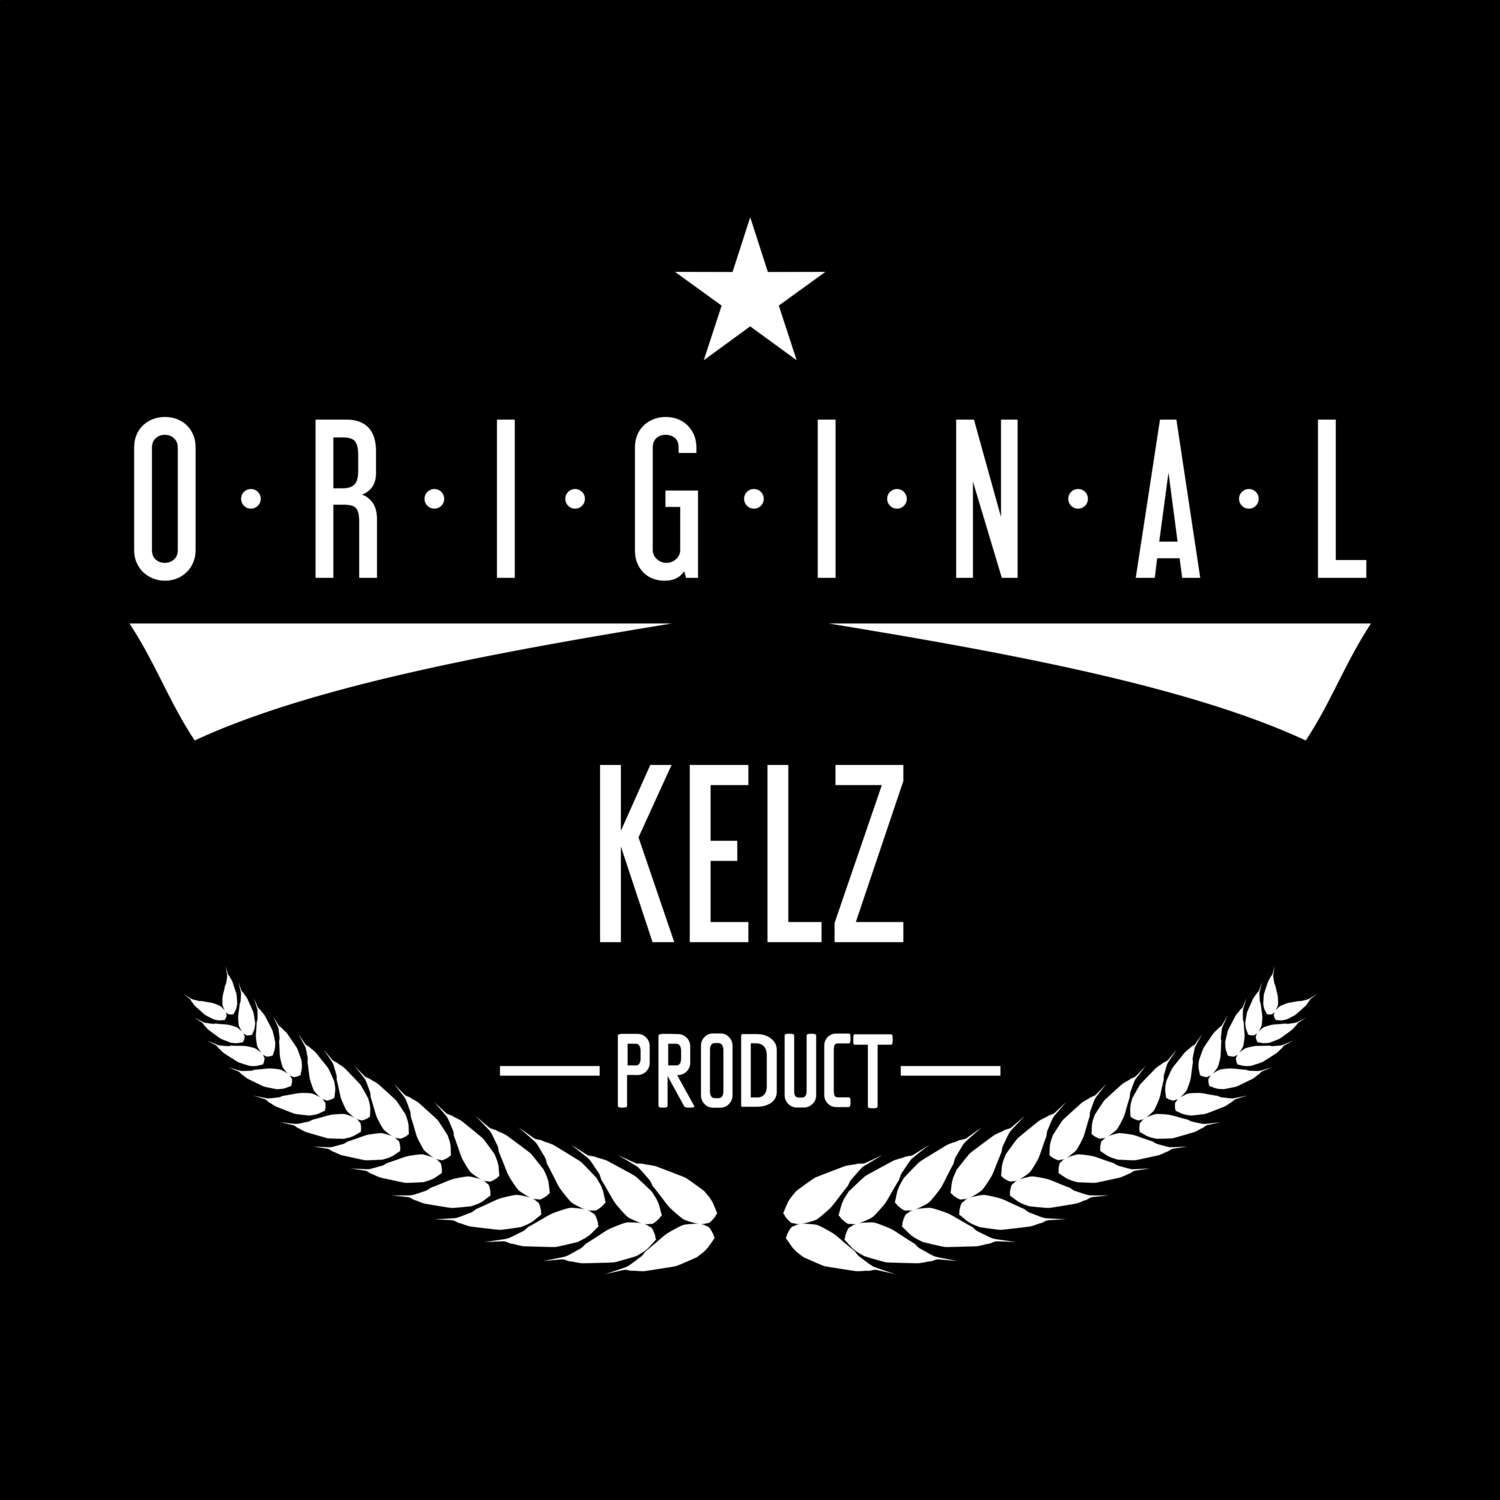 Kelz T-Shirt »Original Product«